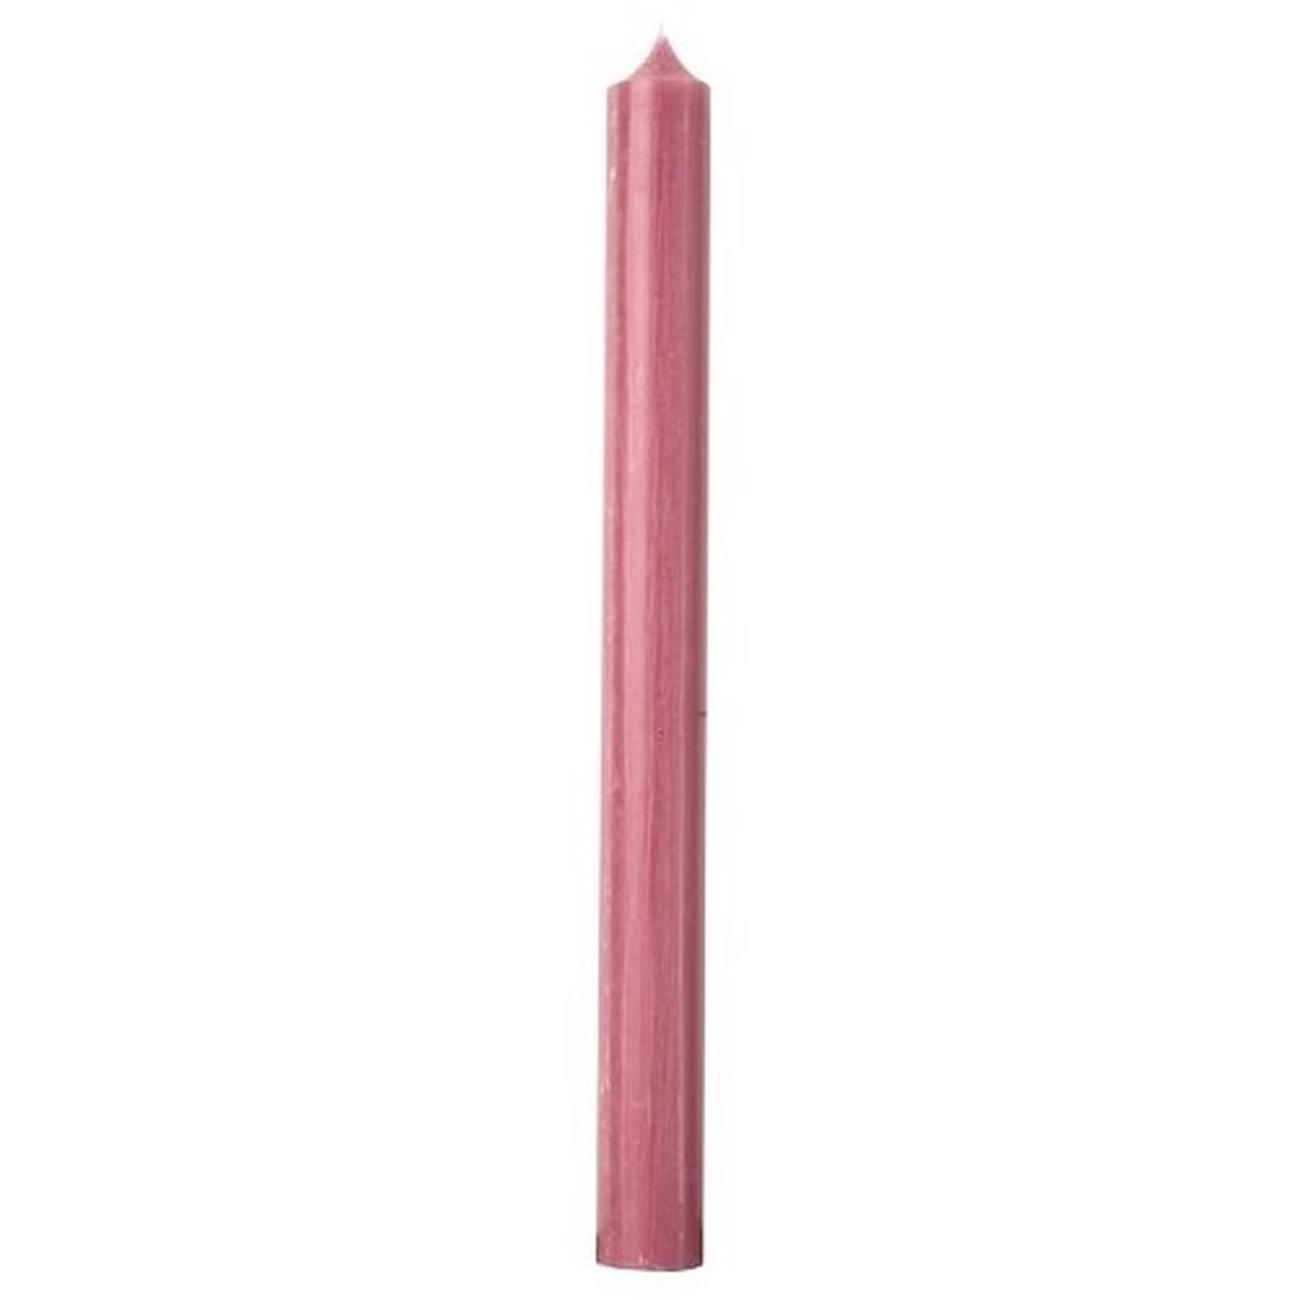 ihr-cylinder-candle-dusty-pink - IHR Cylinder Candle Old Rose